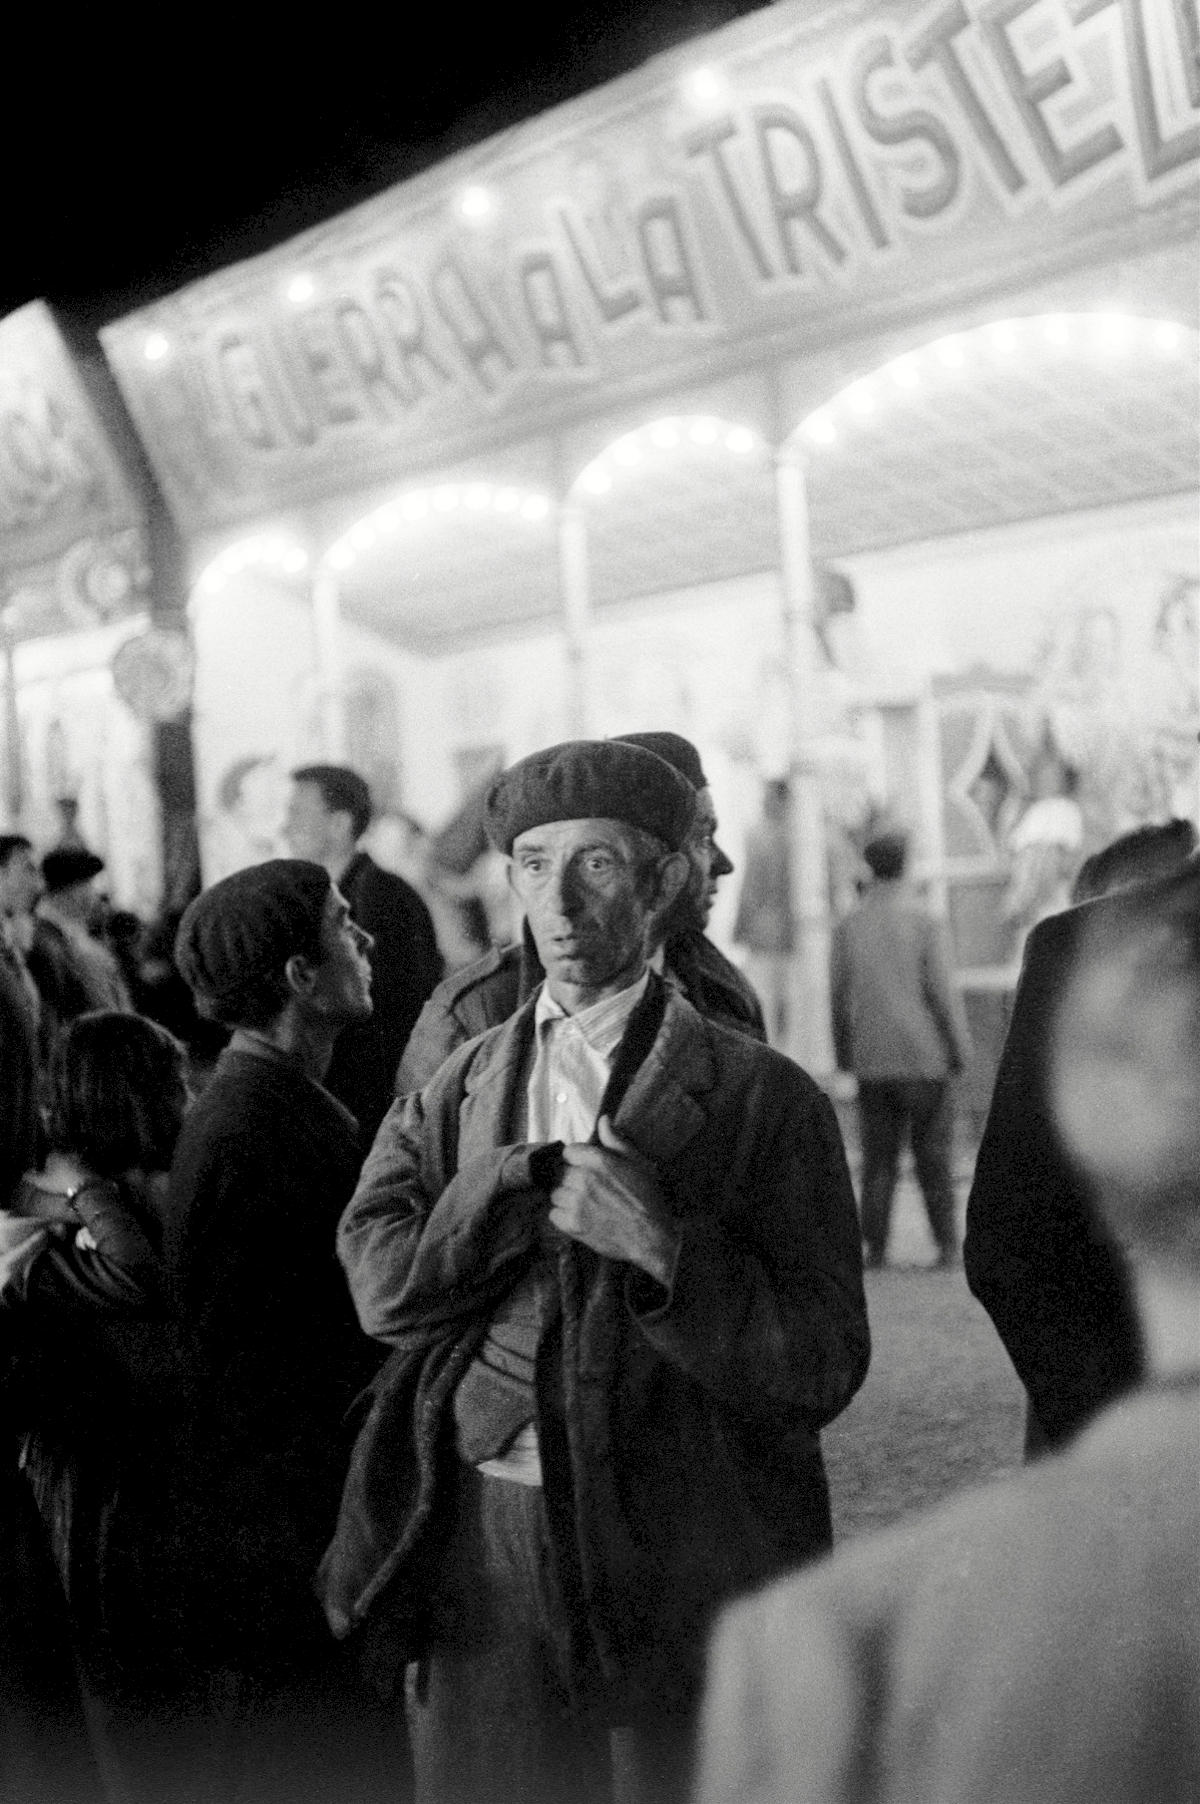 SPAIN. Pamplona. Fairground. During the festival of San Fermin. 1954. © Inge Morath / Magnum Photos / courtesy CLAIRbyKahn